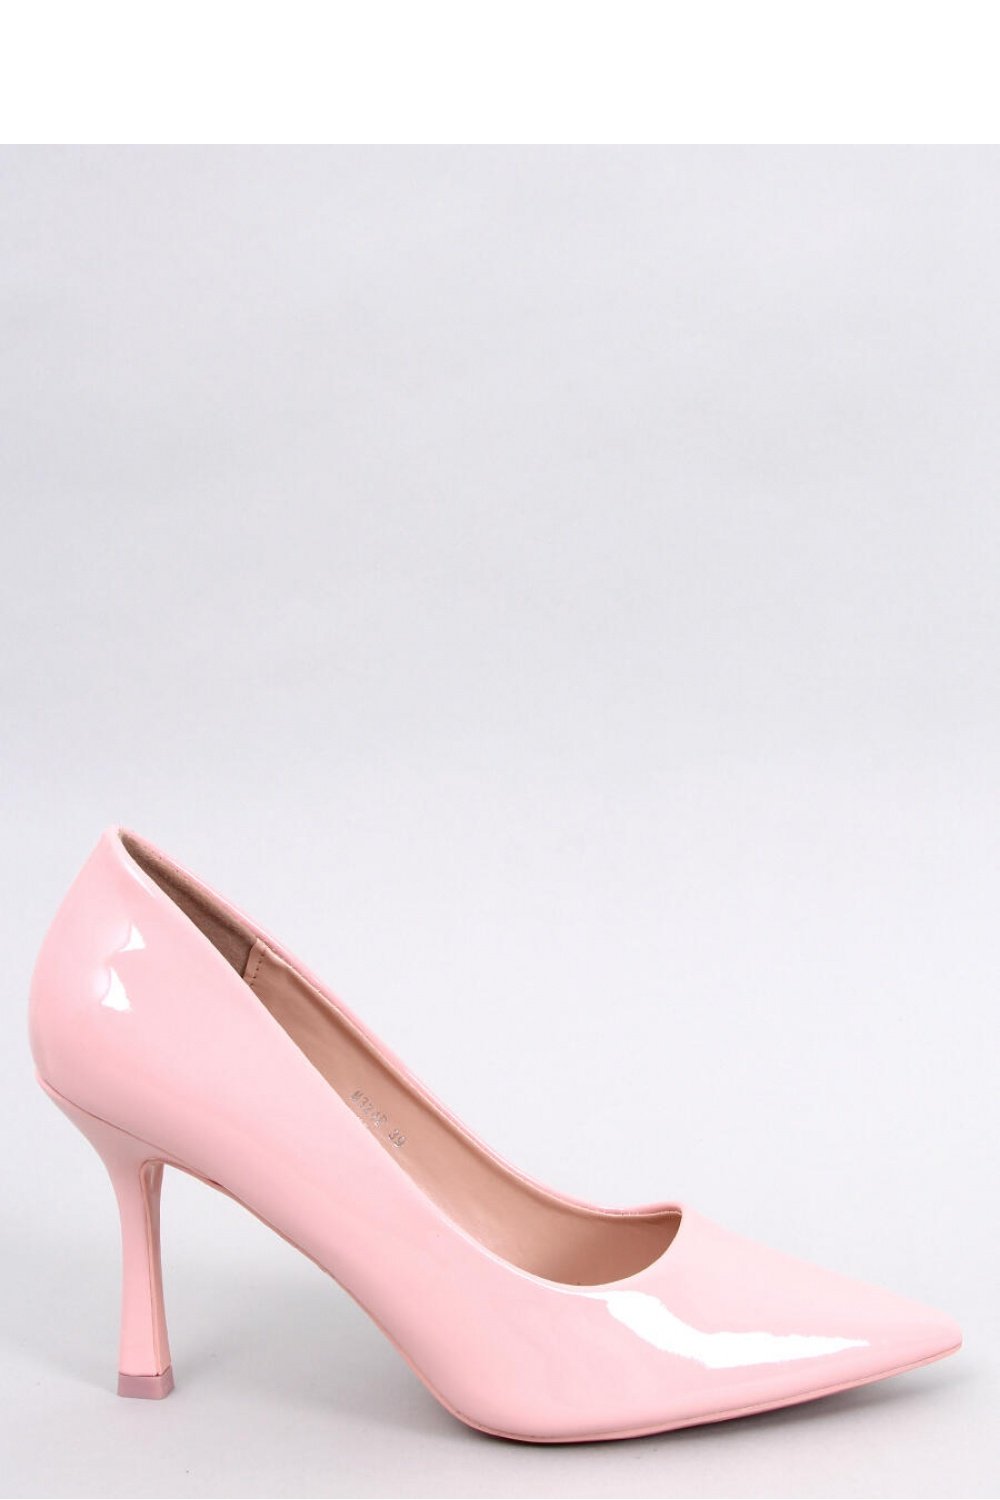 High heels model 181979 Inello Posh Styles Apparel